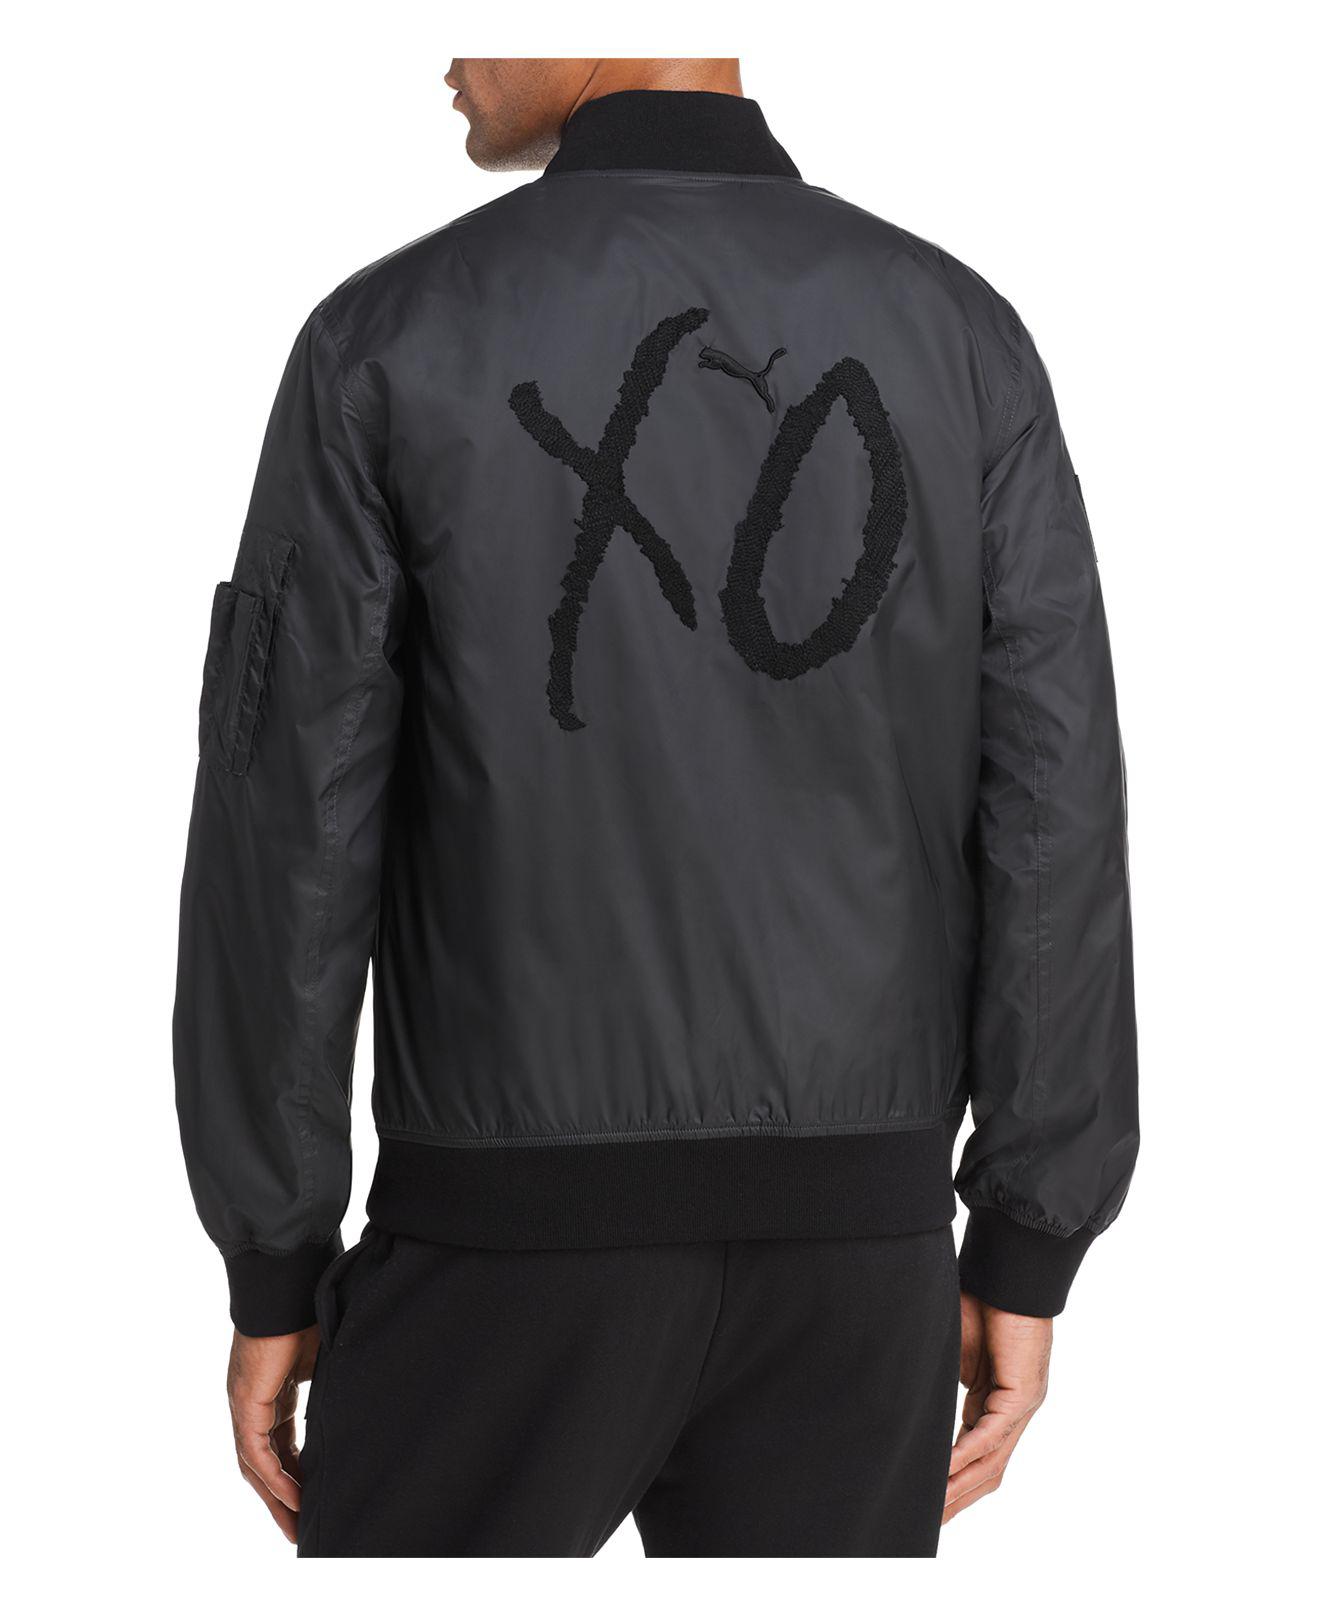 PUMA X Xo The Weeknd Bomber Jacket in Black for Men - Lyst